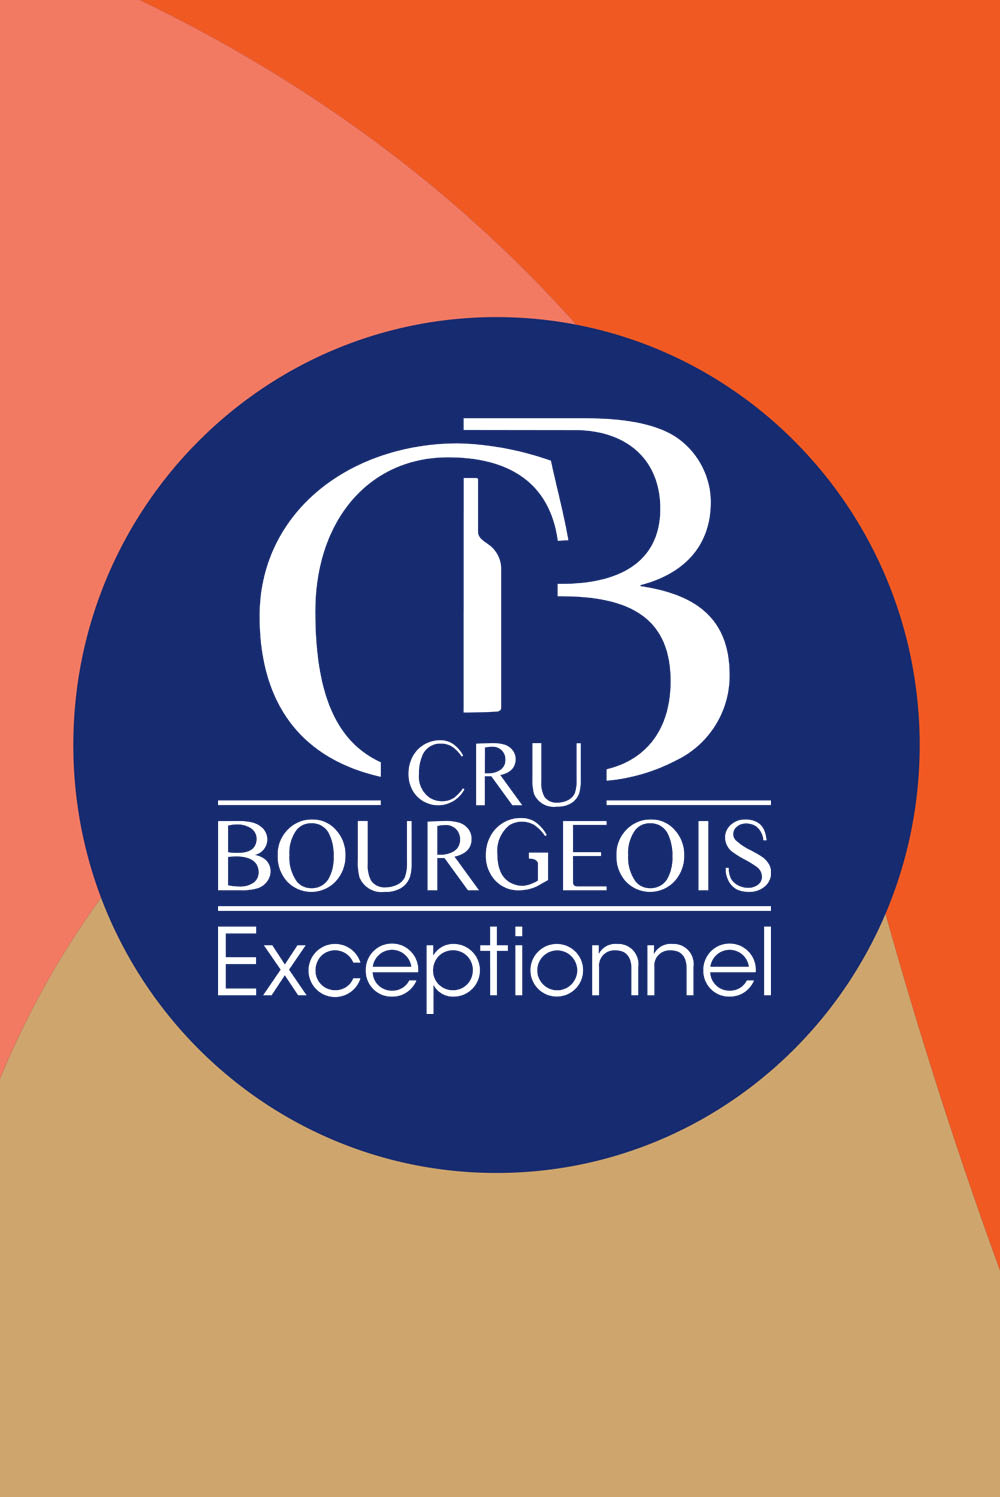 Cru-bourgeois-exceptionnel-Chateau-de-Taillan